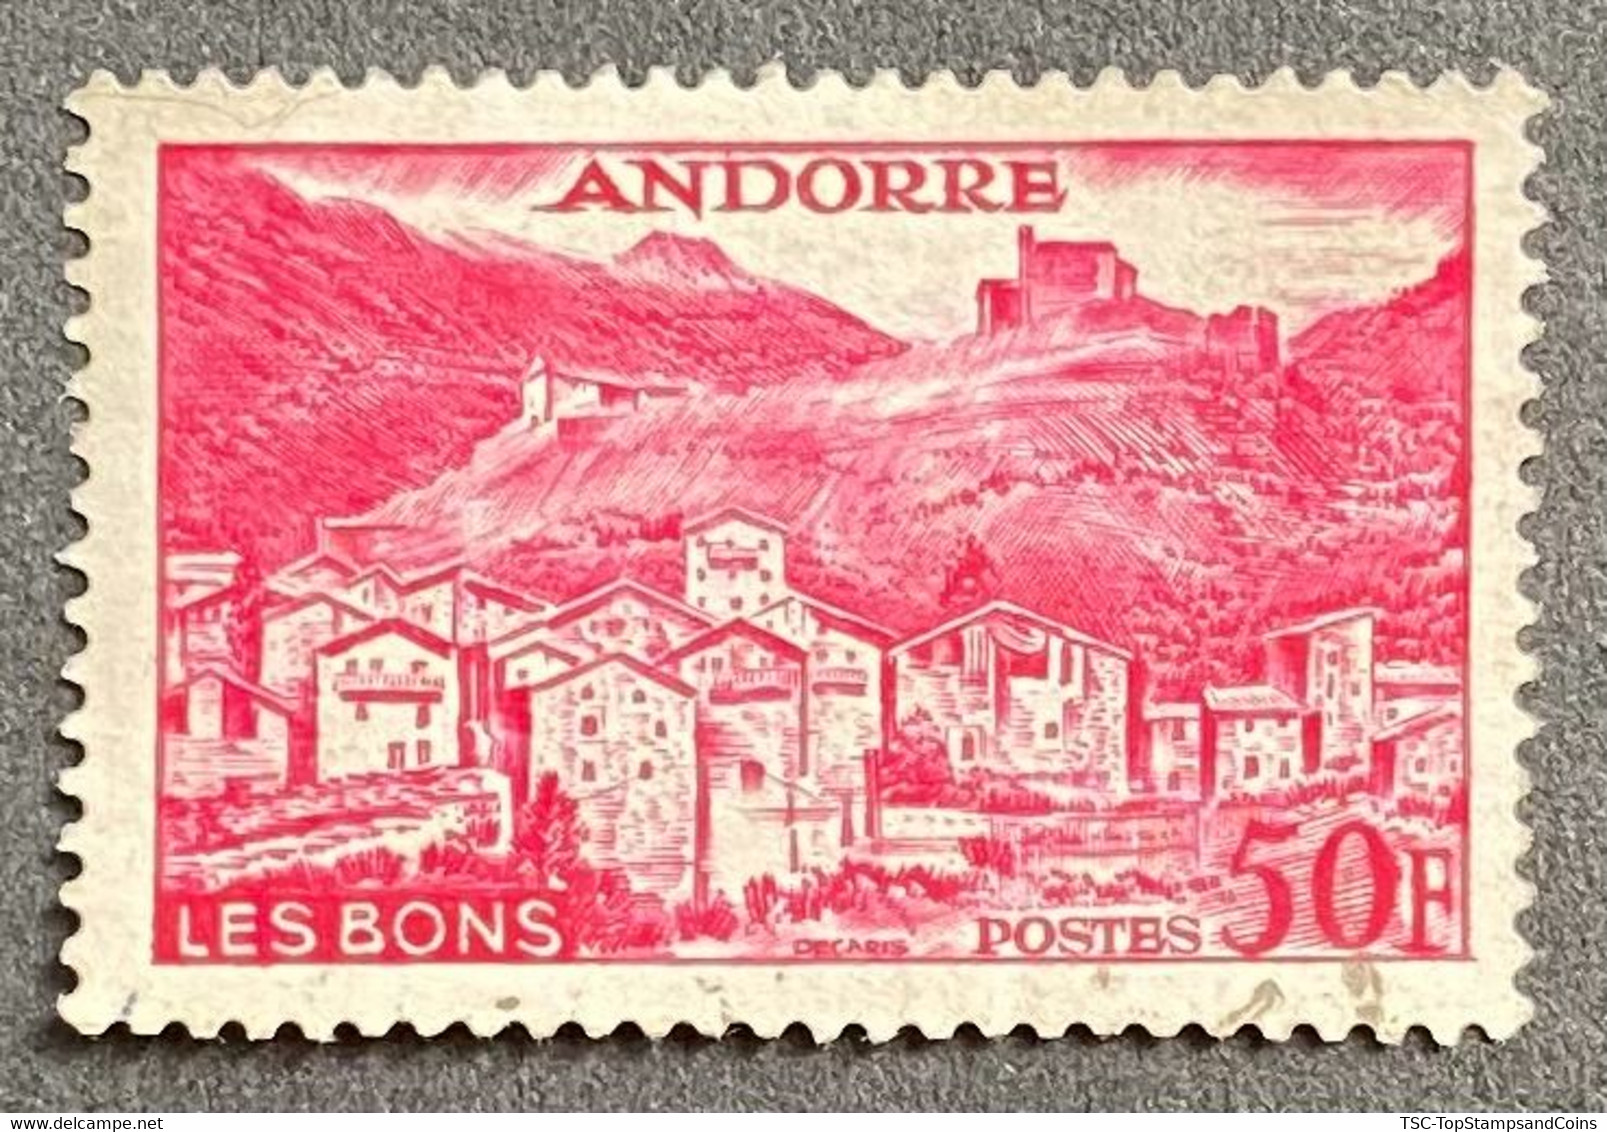 ADFR0152U - Paysages De La Principauté - 50 F Used Stamp - French Andorra - 1955 - Gebruikt